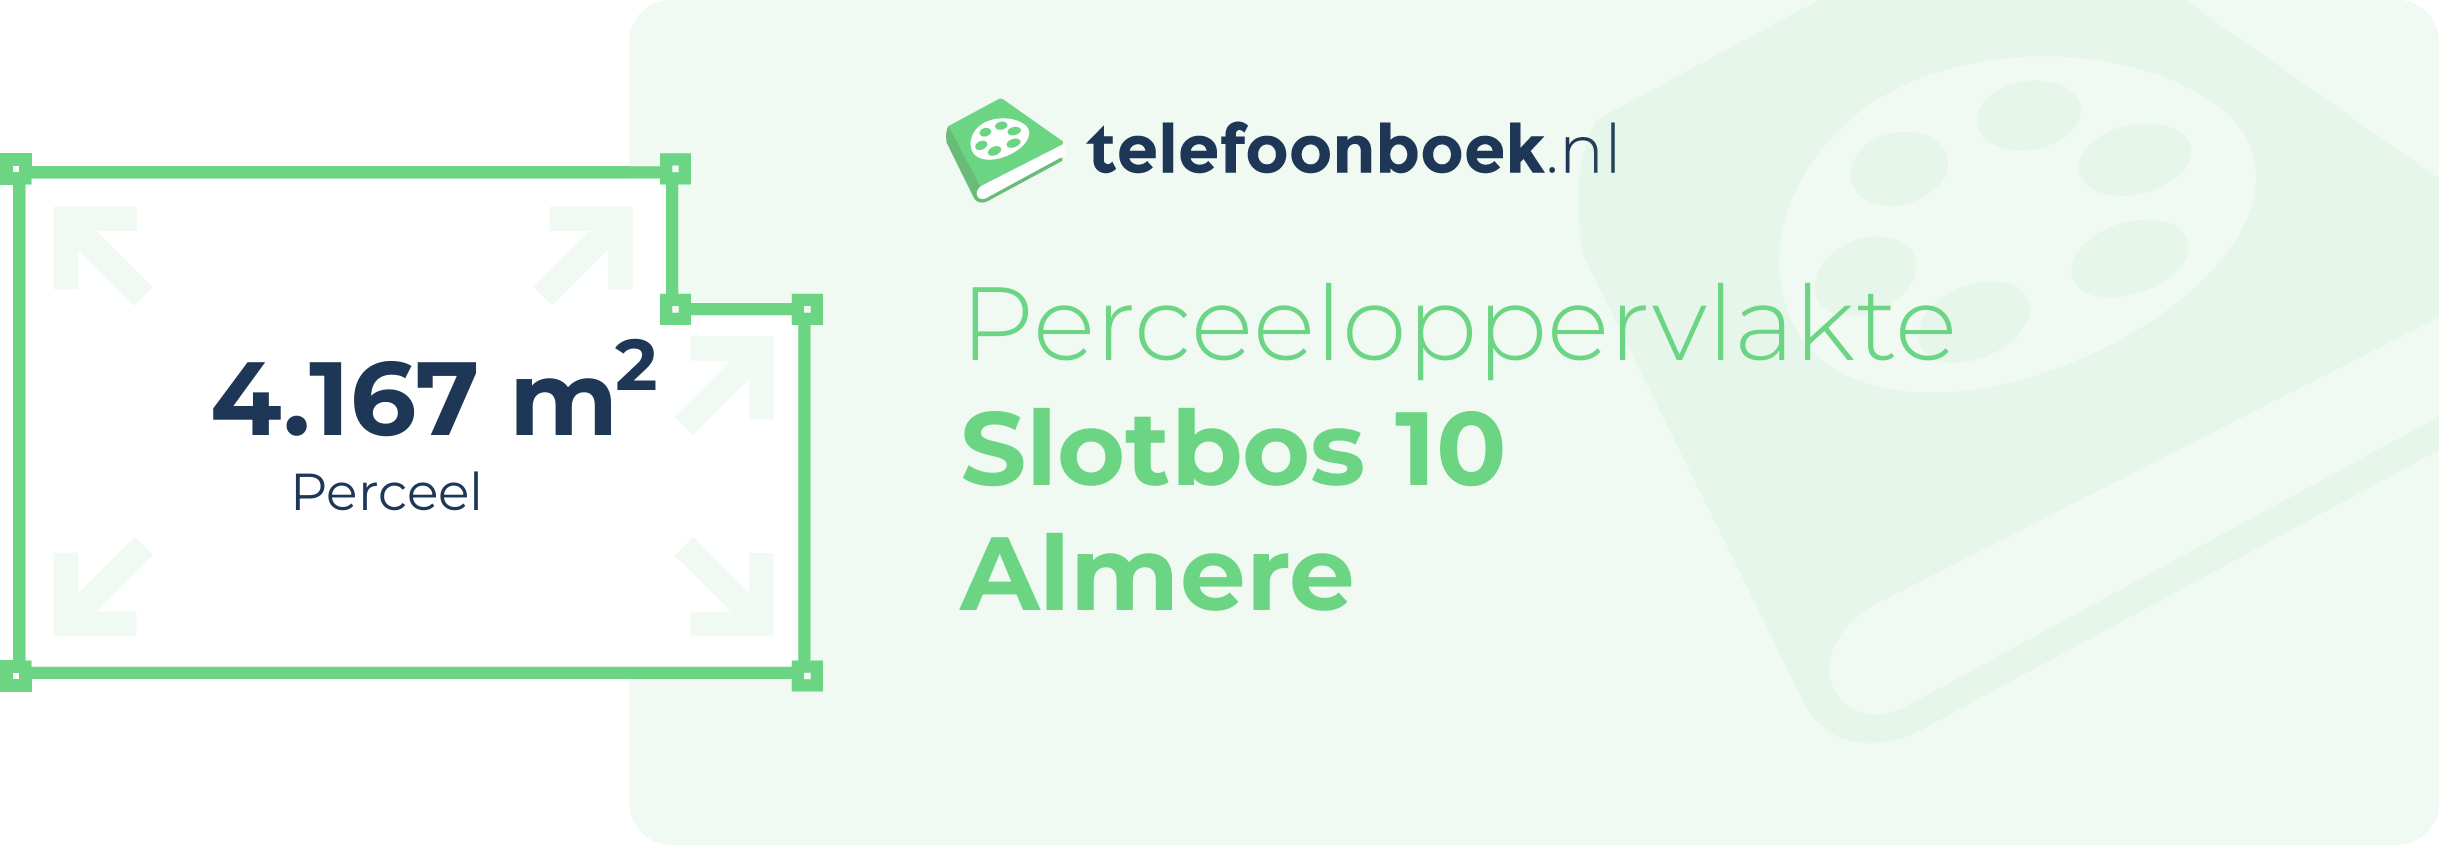 Perceeloppervlakte Slotbos 10 Almere